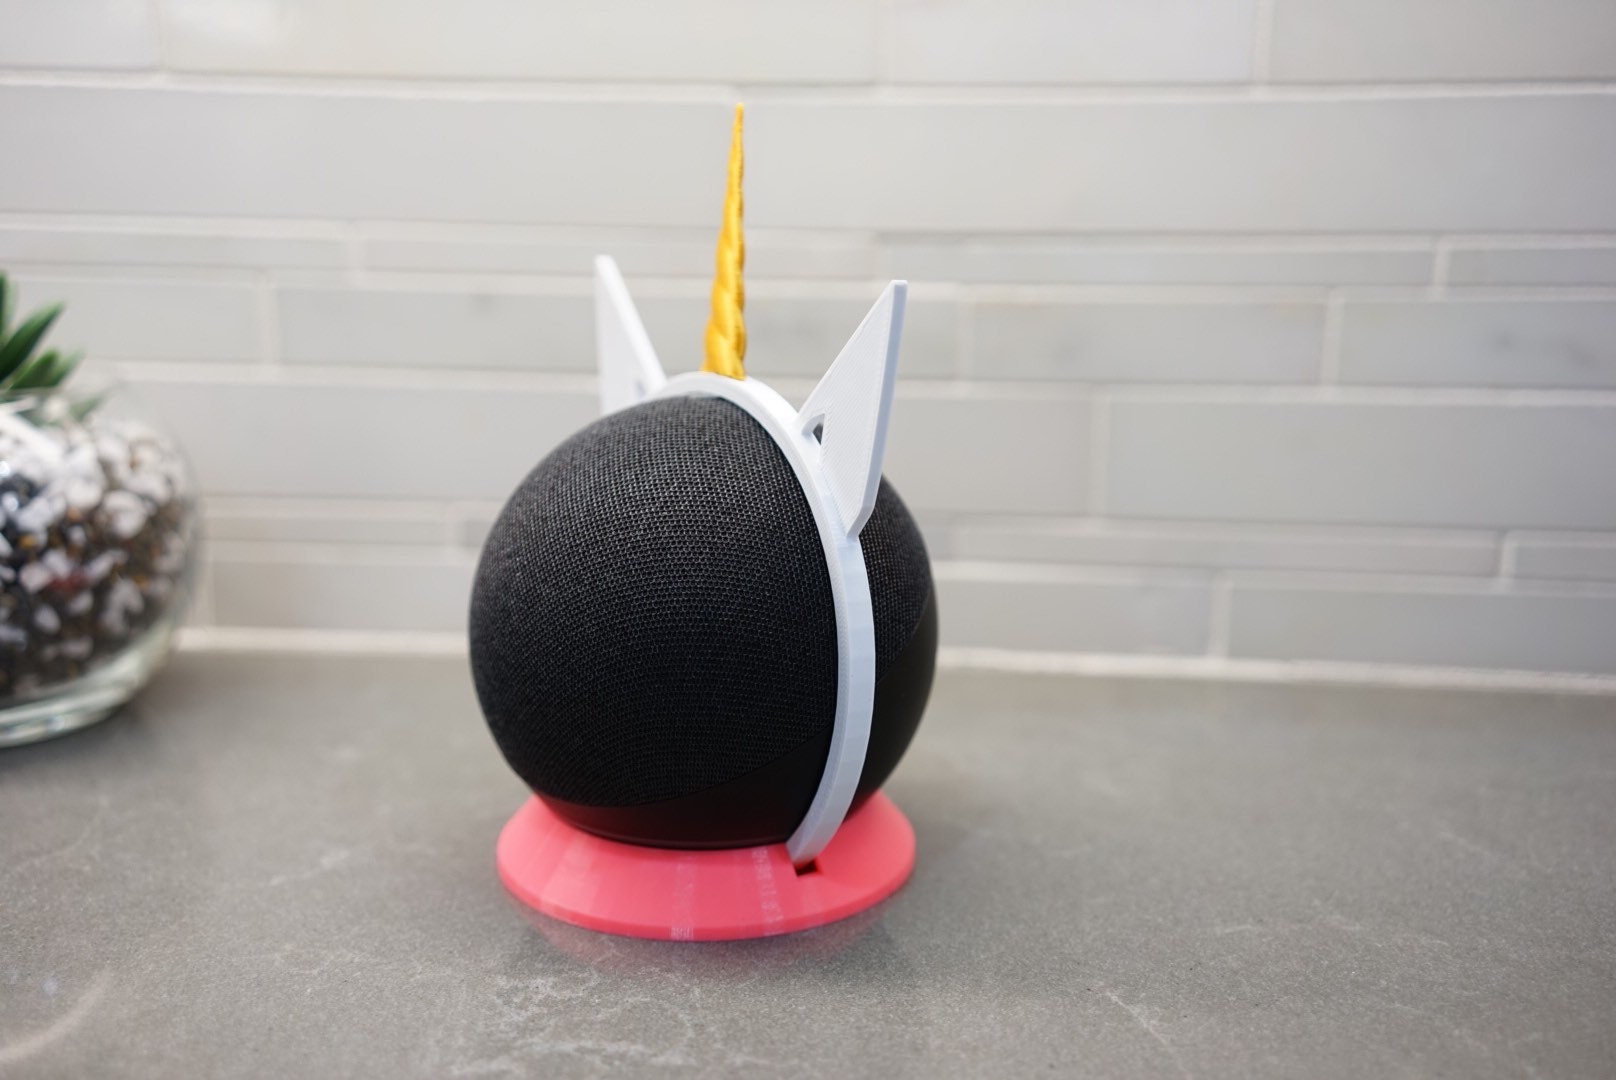 Pikachu inspiró  Echo, Echo Dot 4.a o 5.a generación o mini soporte  de altavoz Apple HomePod para su altavoz doméstico inteligente impreso en  3D 1pc -  México